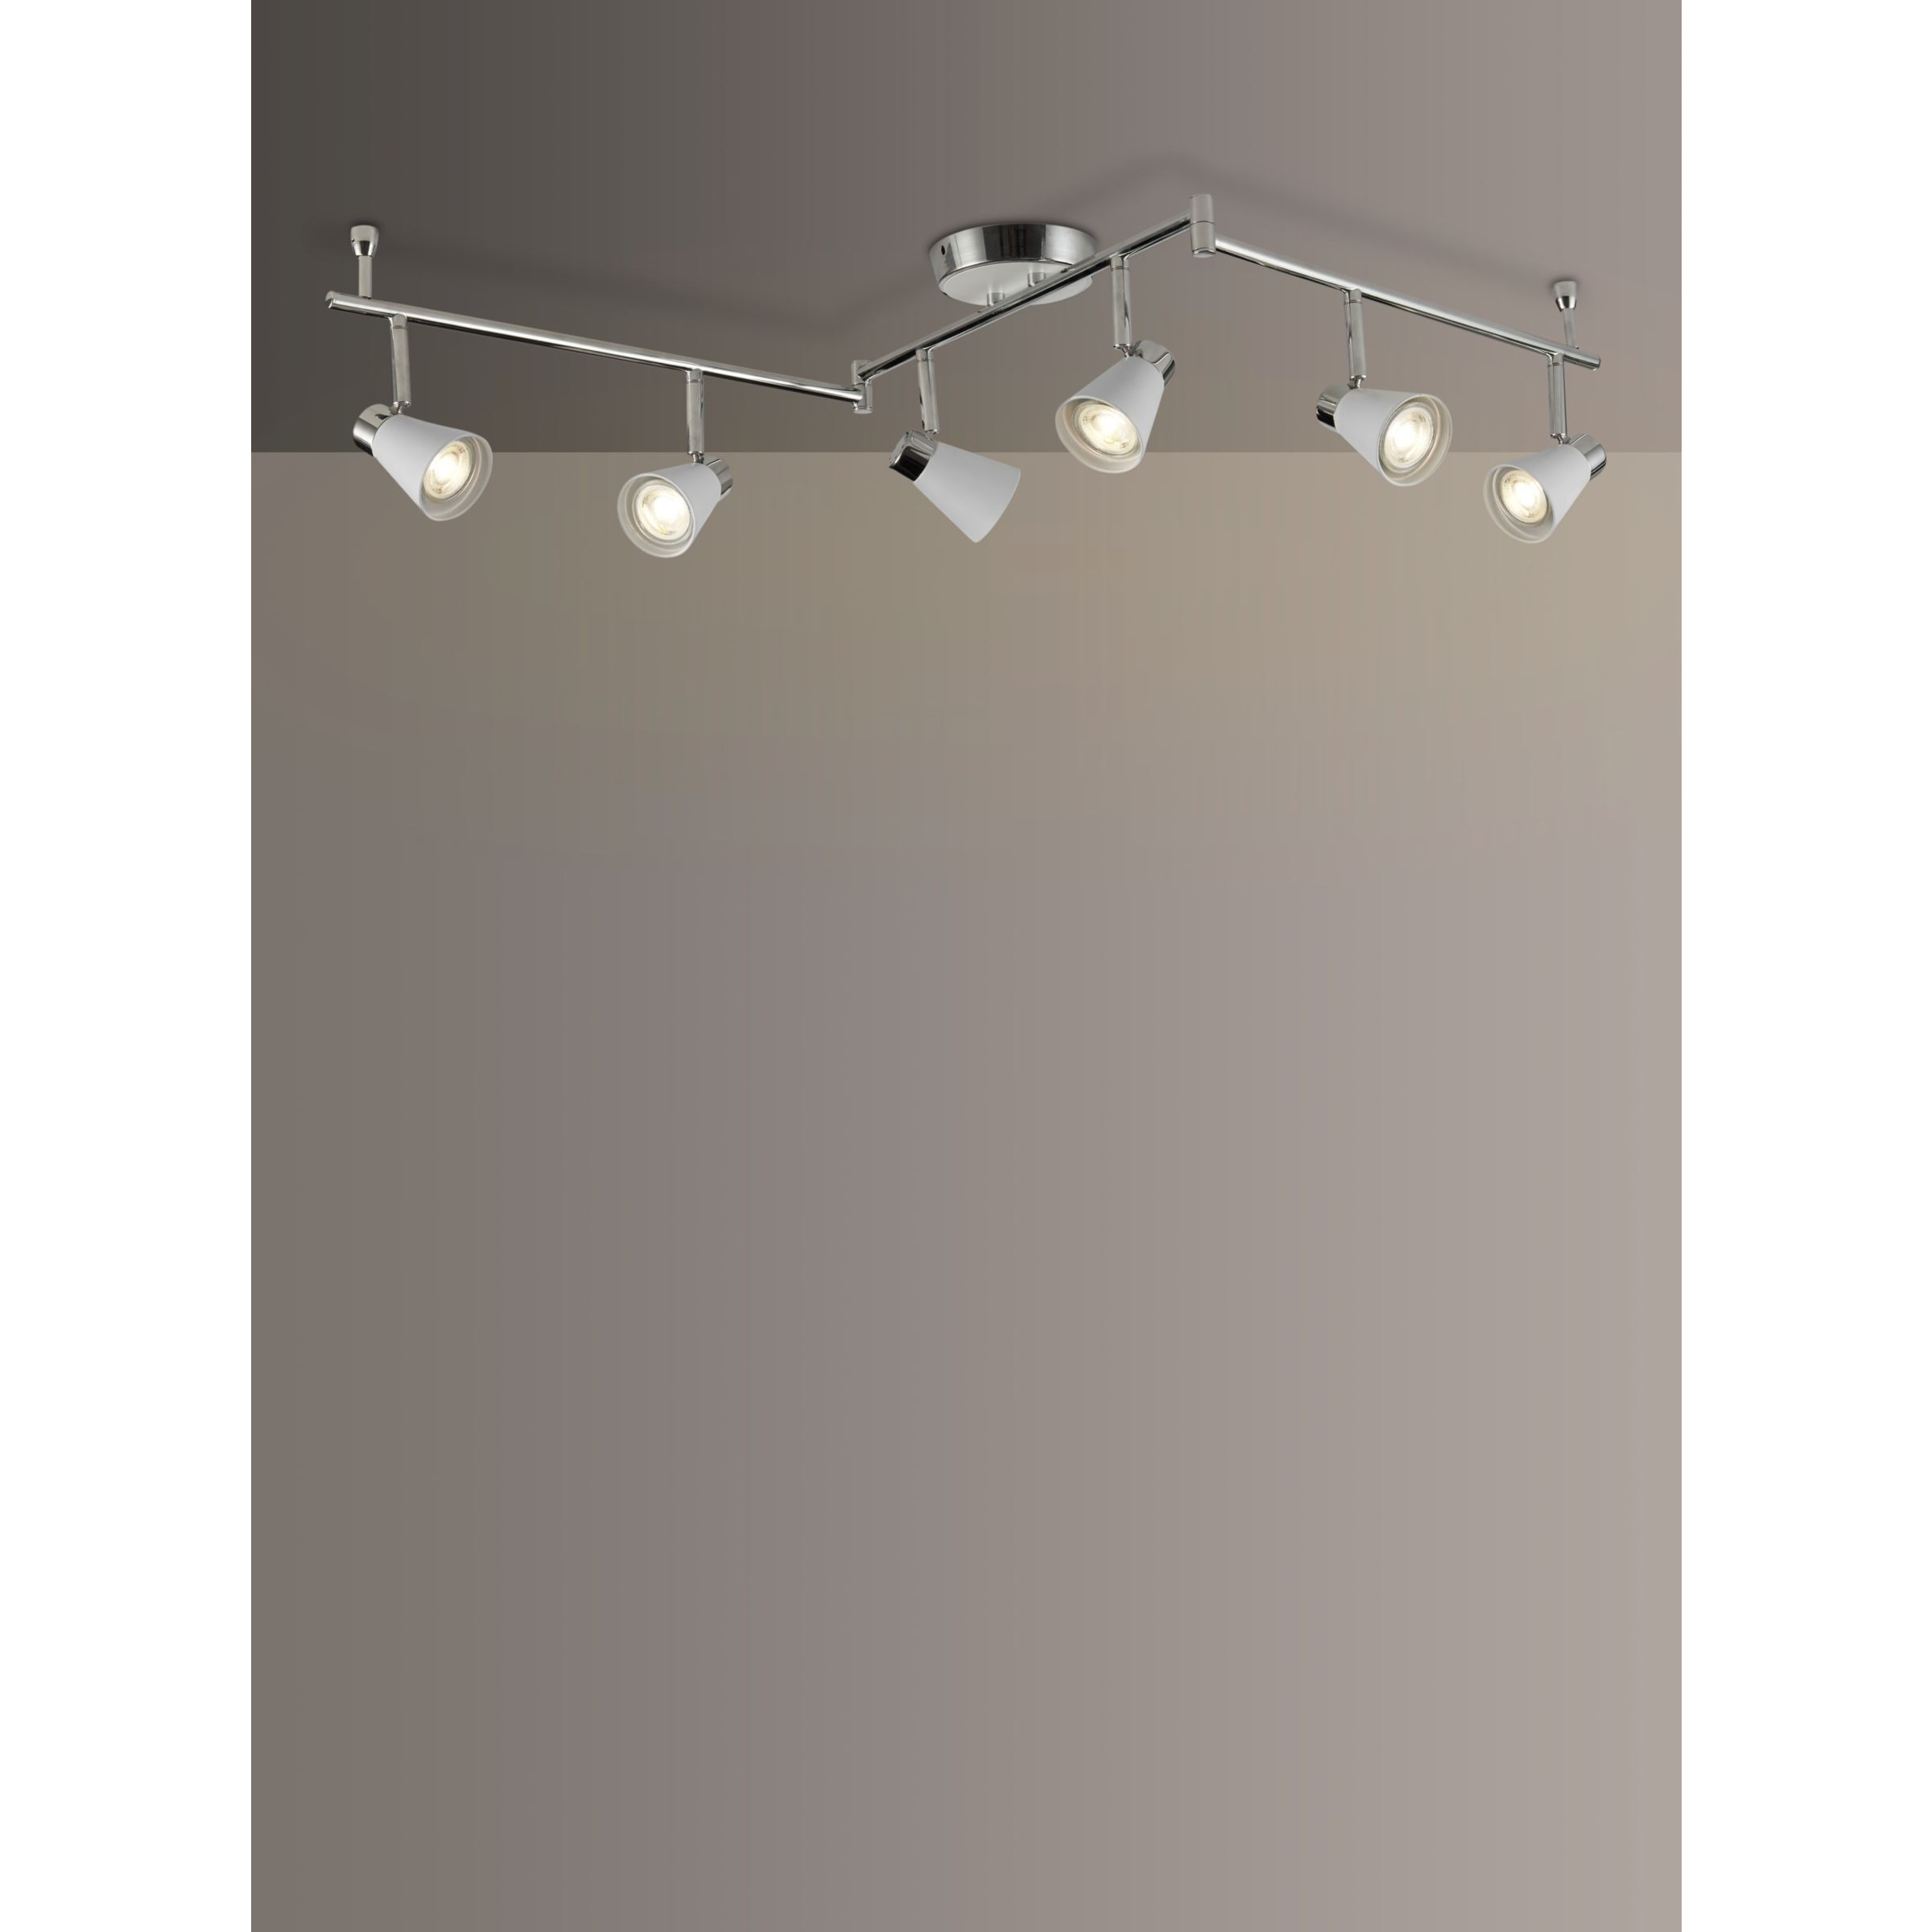 John Lewis Logan GU10 LED 6 Spotlight Ceiling Bar - image 1